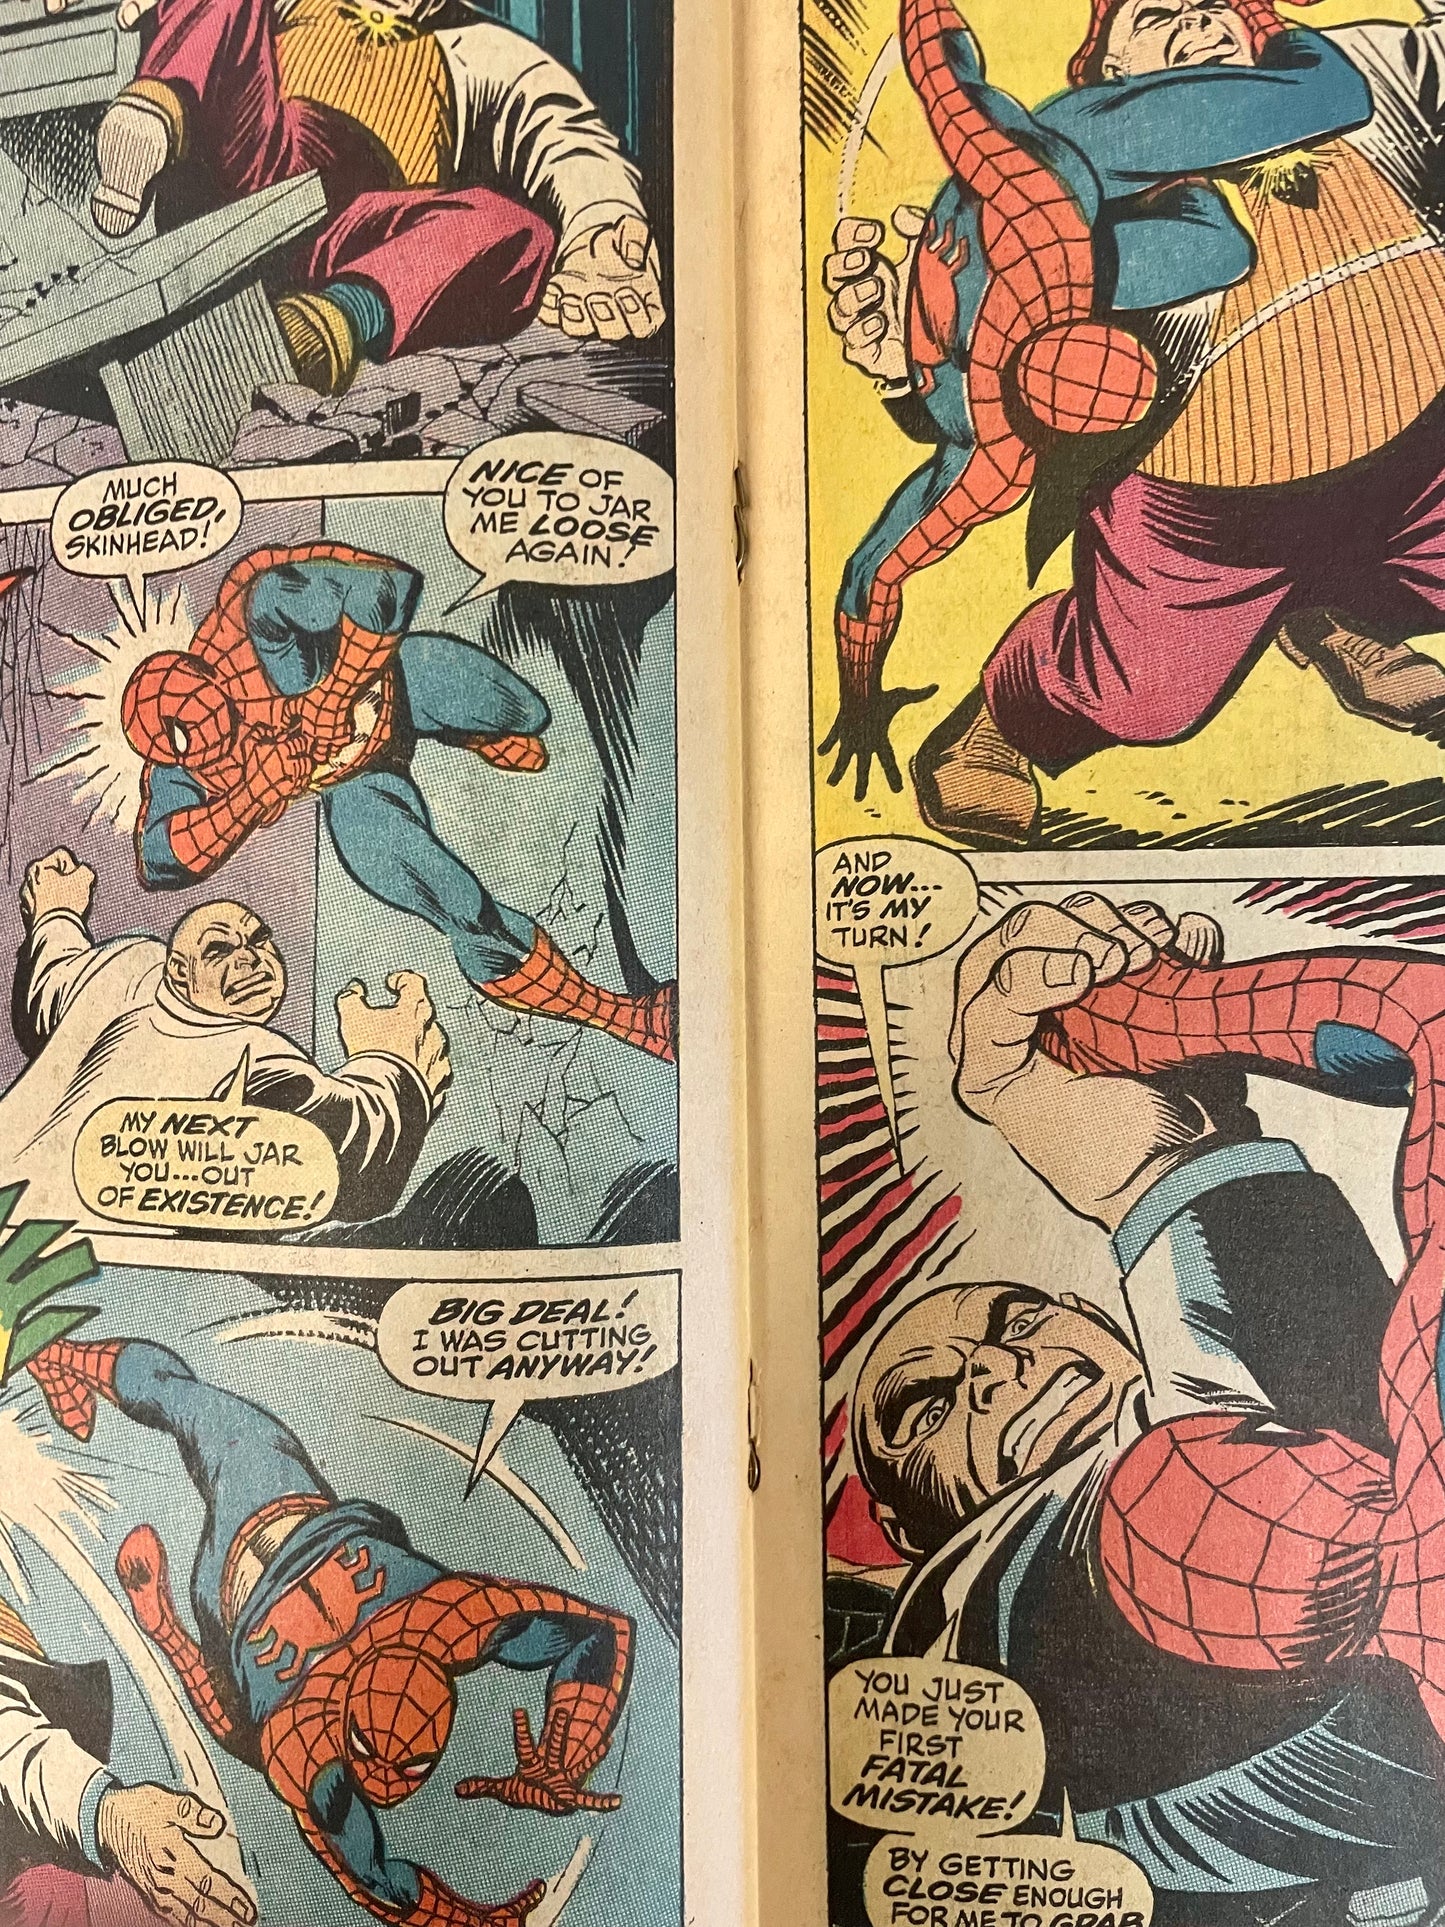 Marvel Comics the Amazing Spider-Man #69